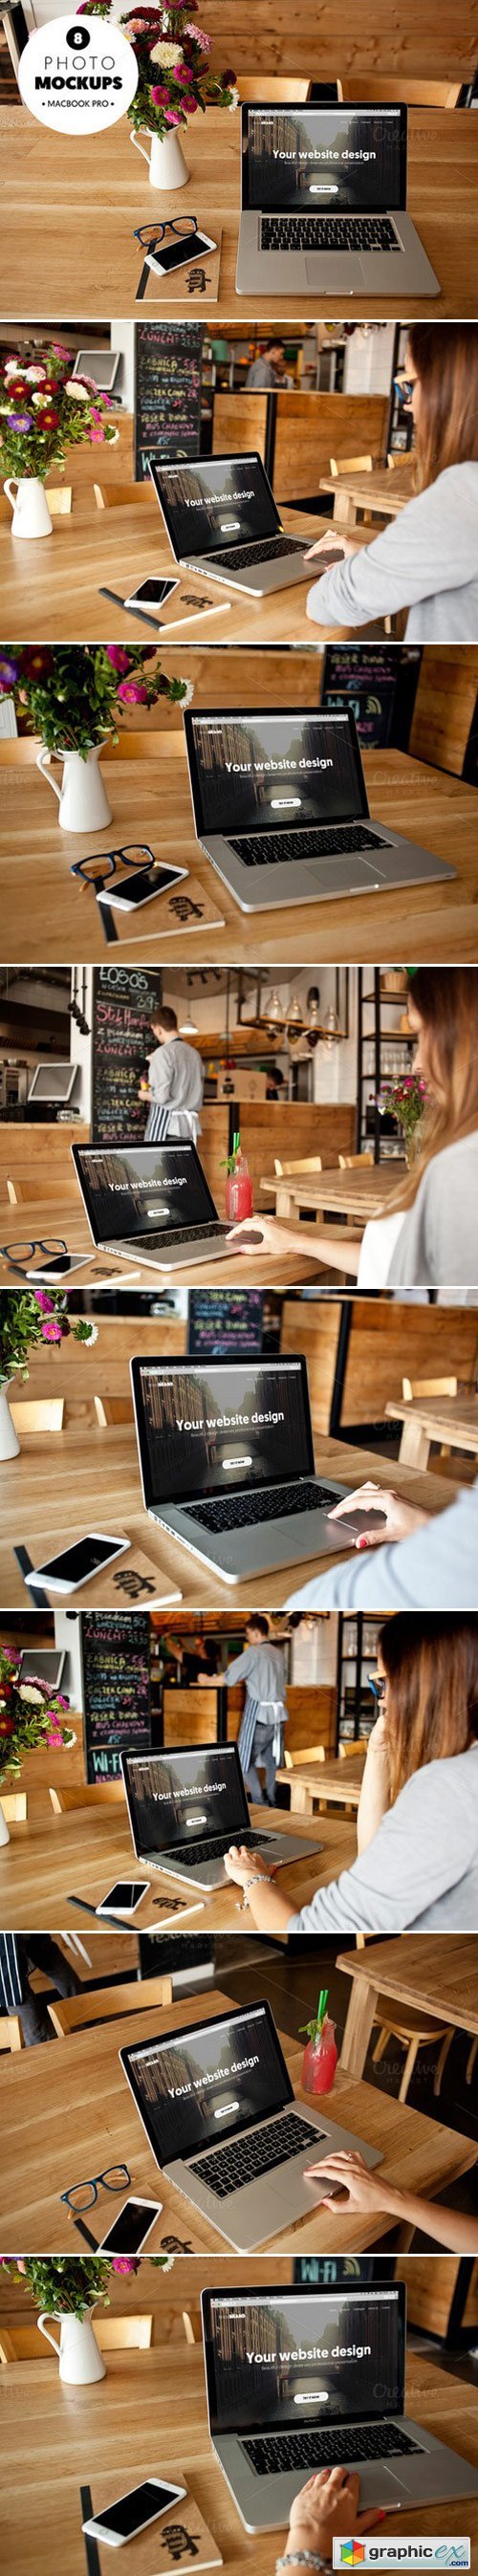 MacBook Pro - 8 mockups in a cafe